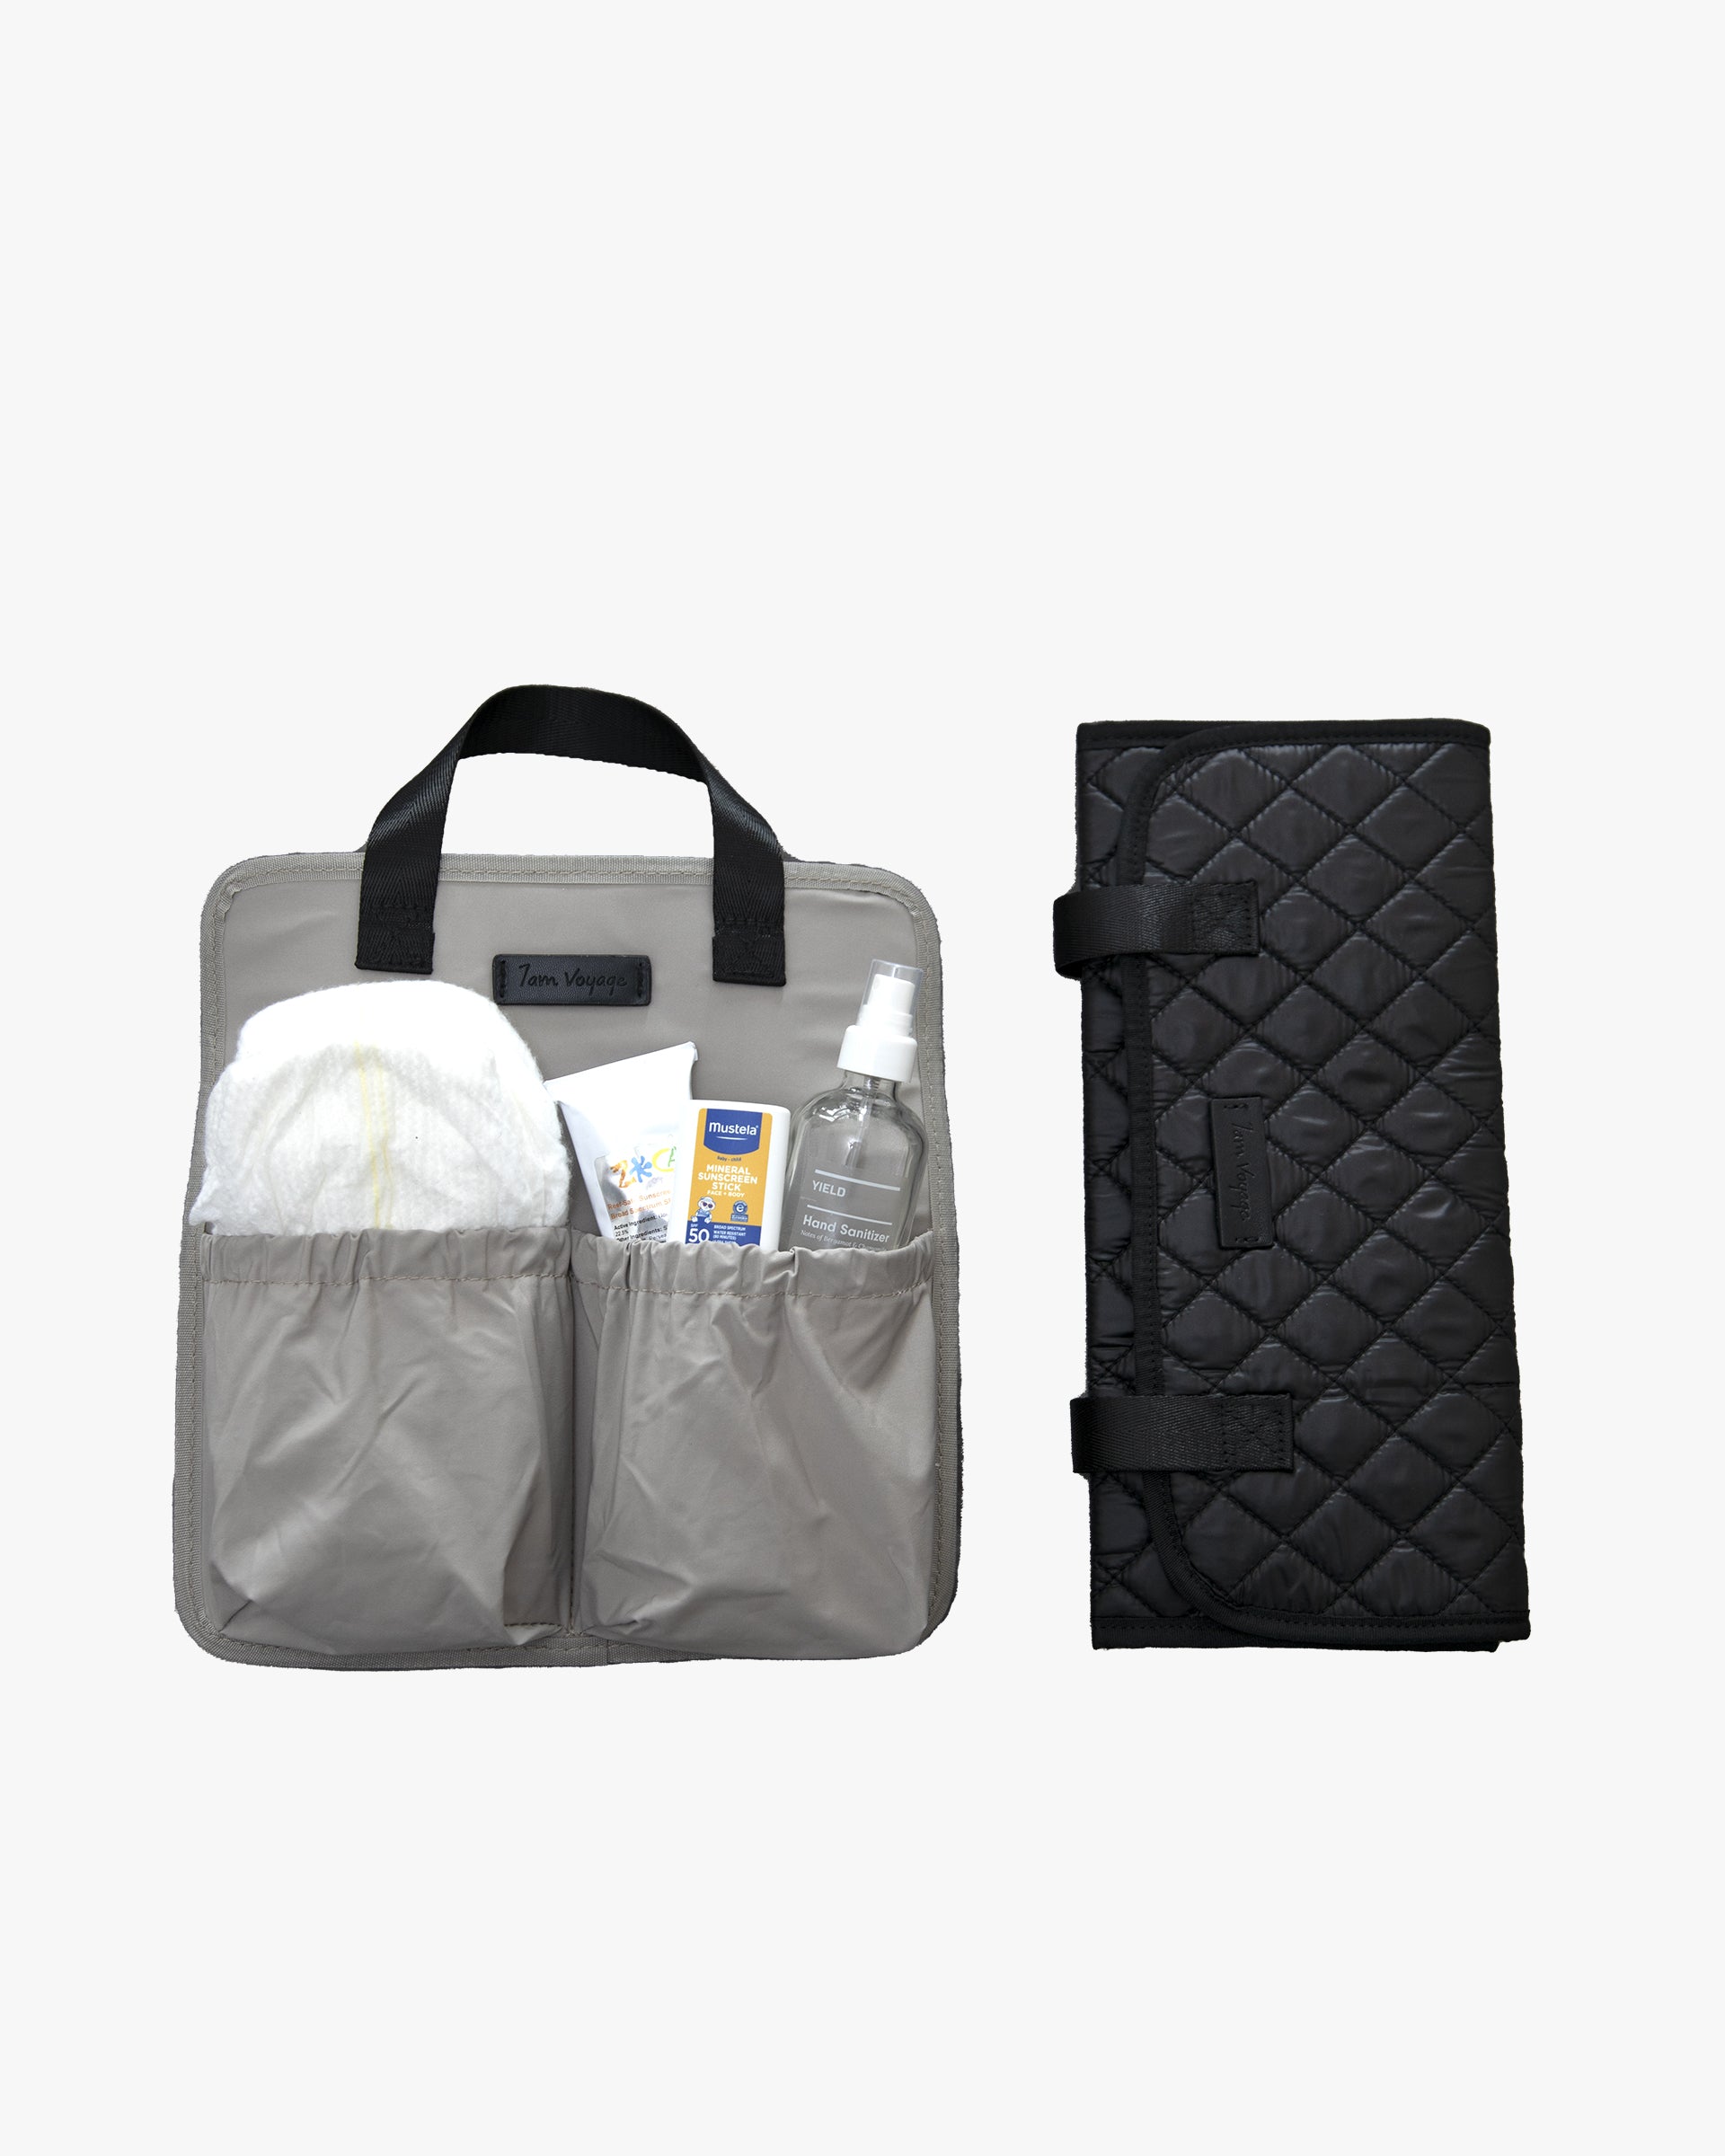 Black Polar/Diaper Bag